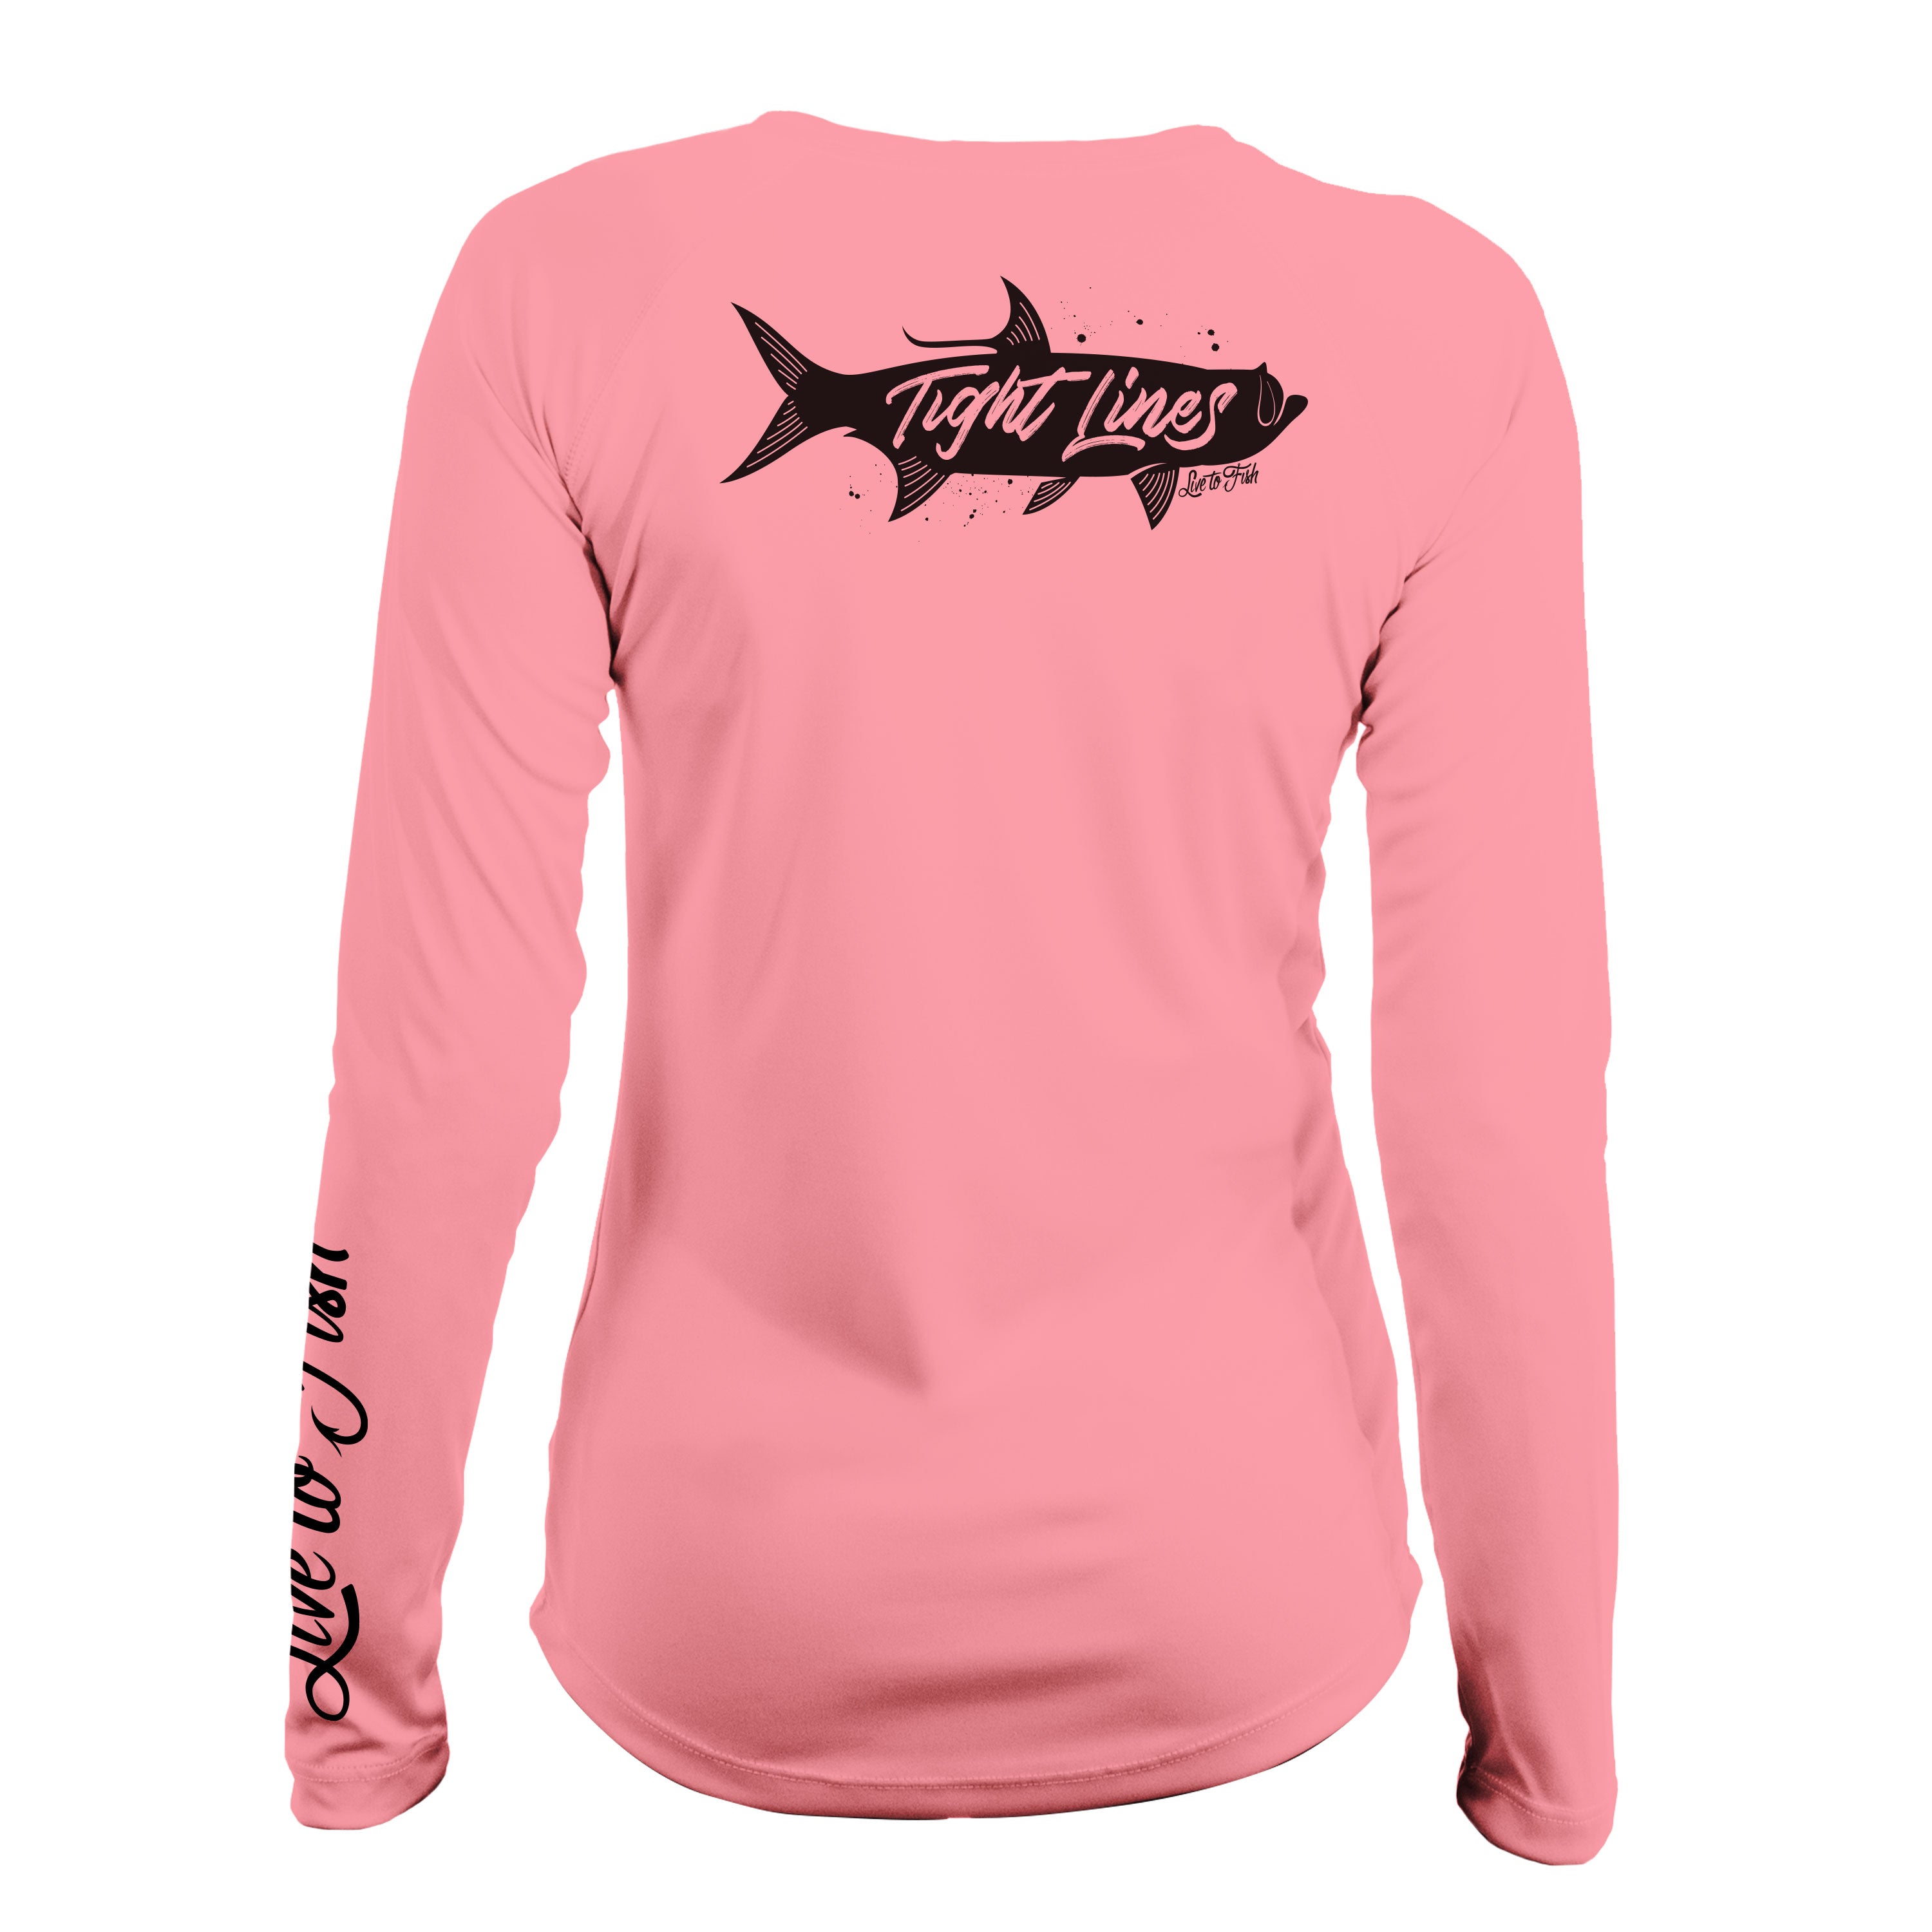 Tight Lines Tarpon Ladies Long Sleeve UV Shirt, Pk | Live to Fish XXL